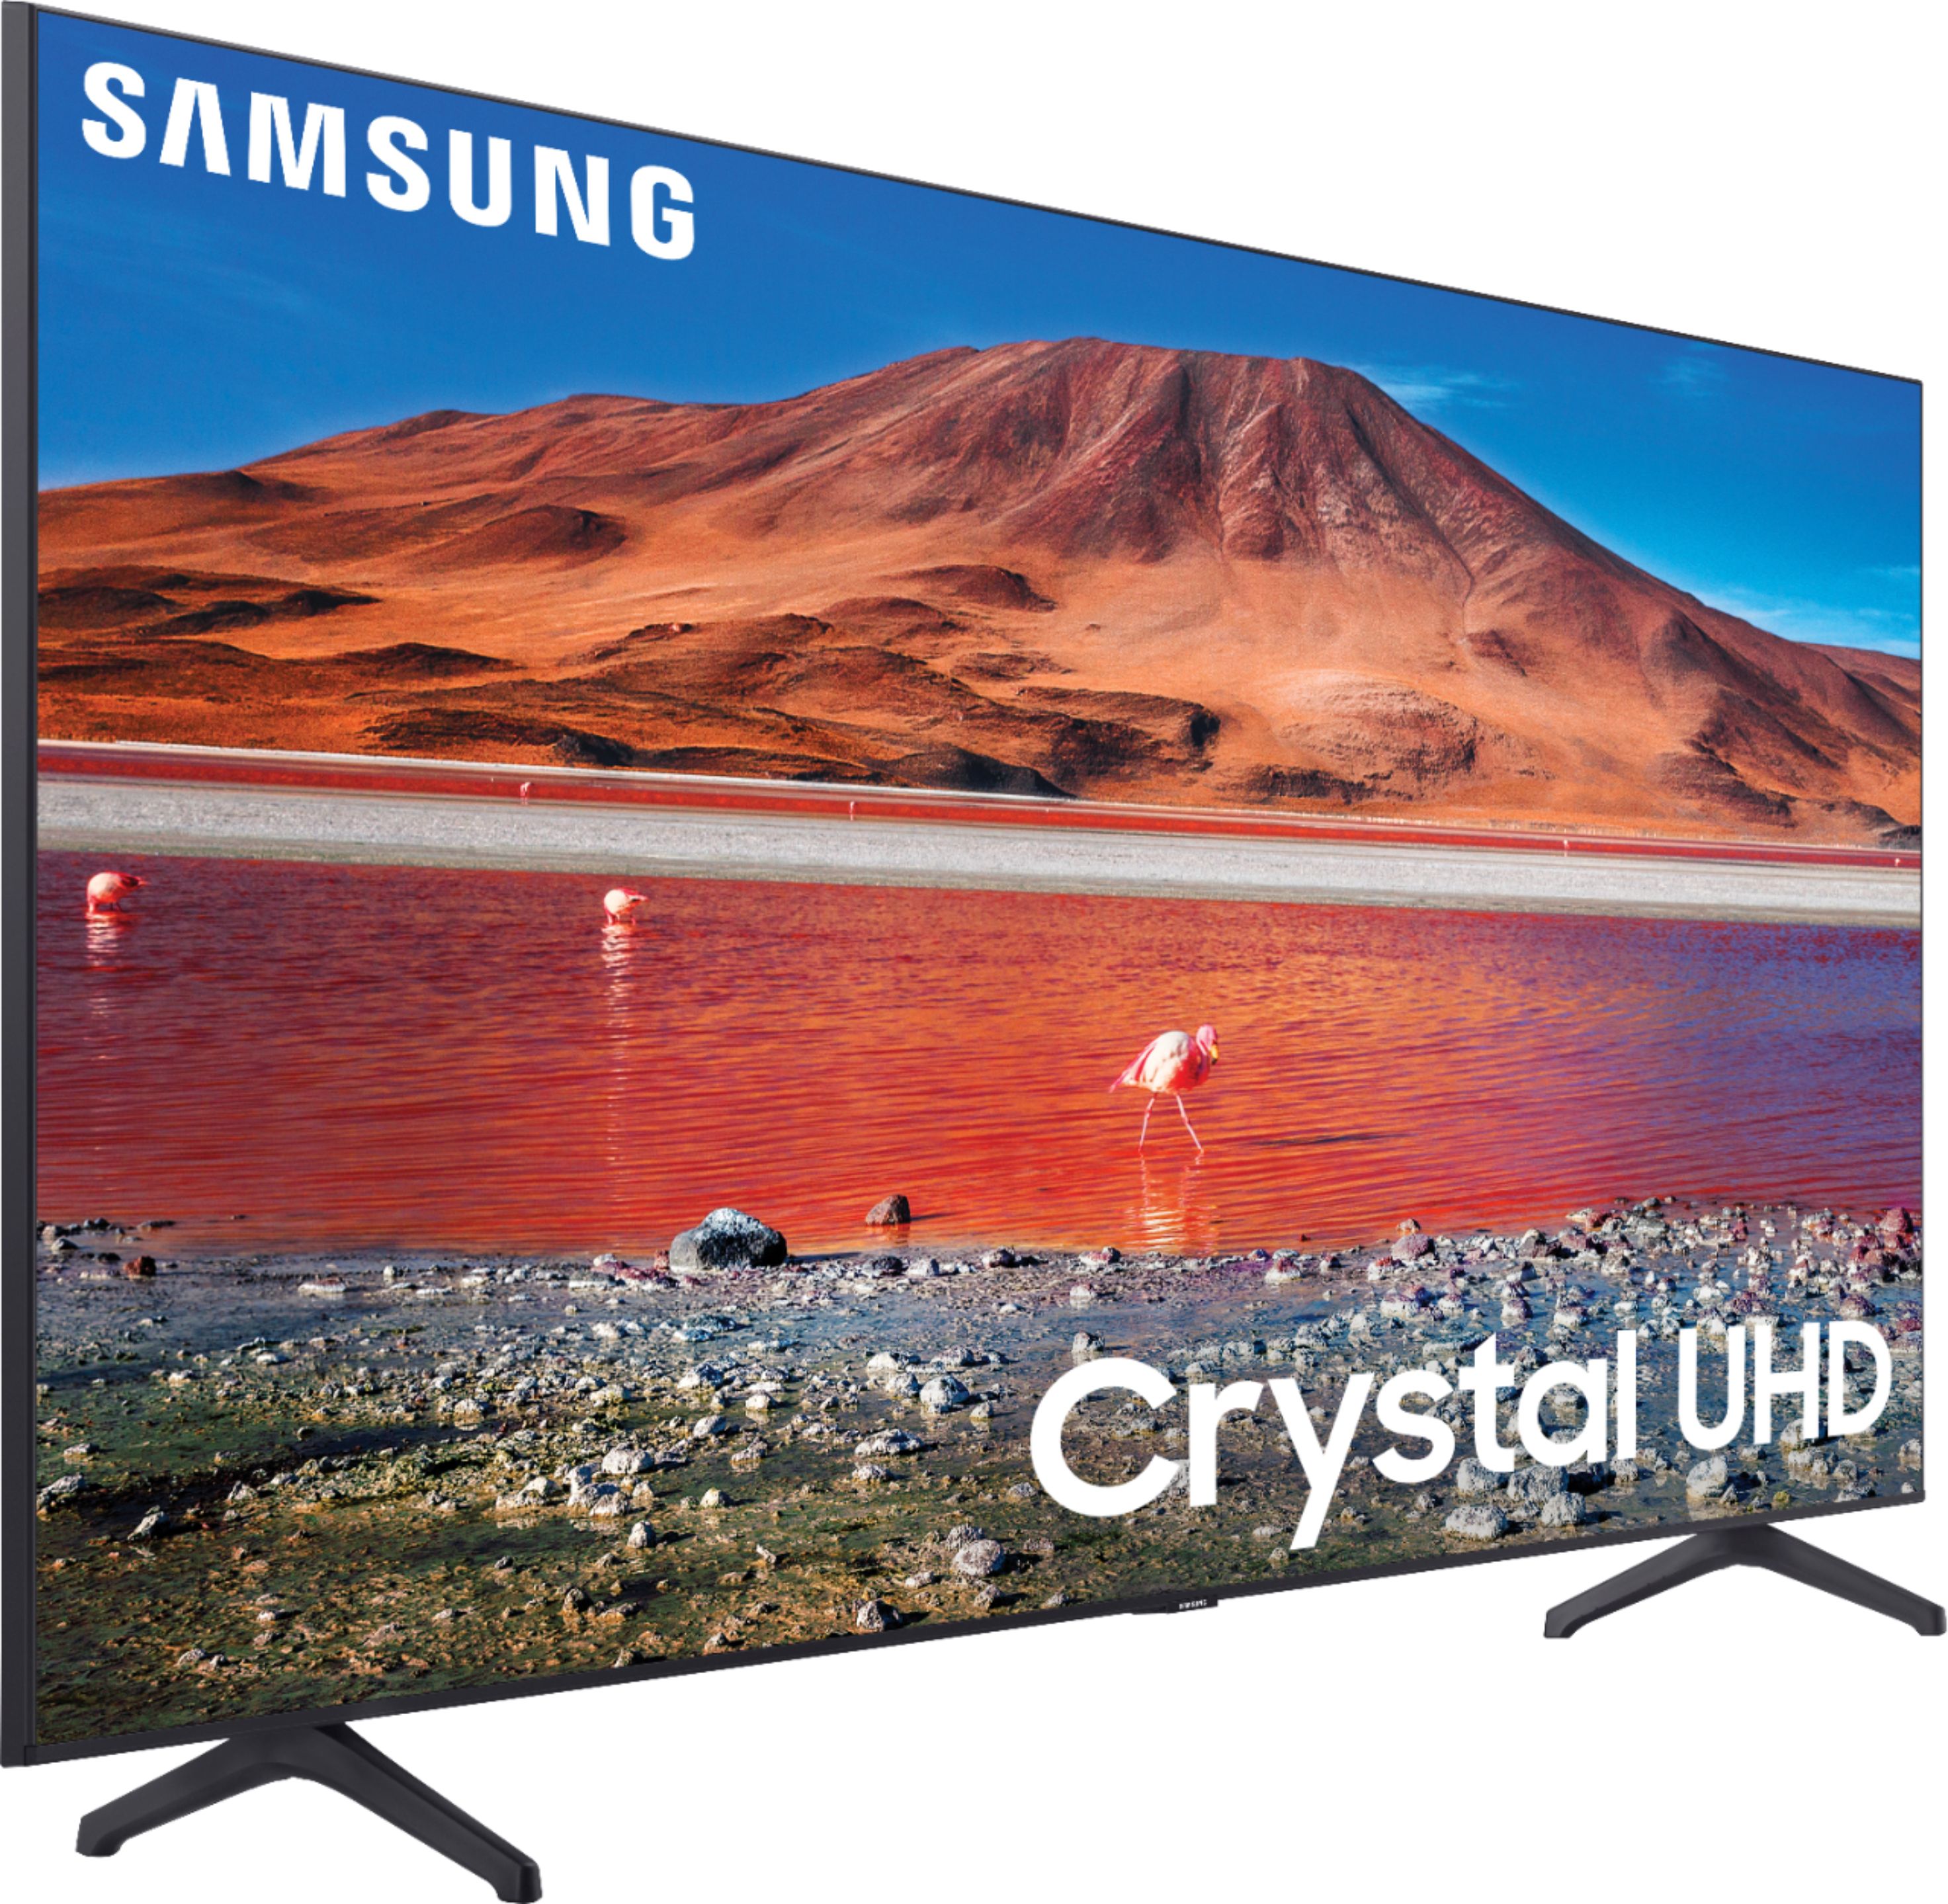 Samsung 65 Class 7 Series Led 4k Uhd Smart Tizen Tv Un65tu7000fxza Best Buy